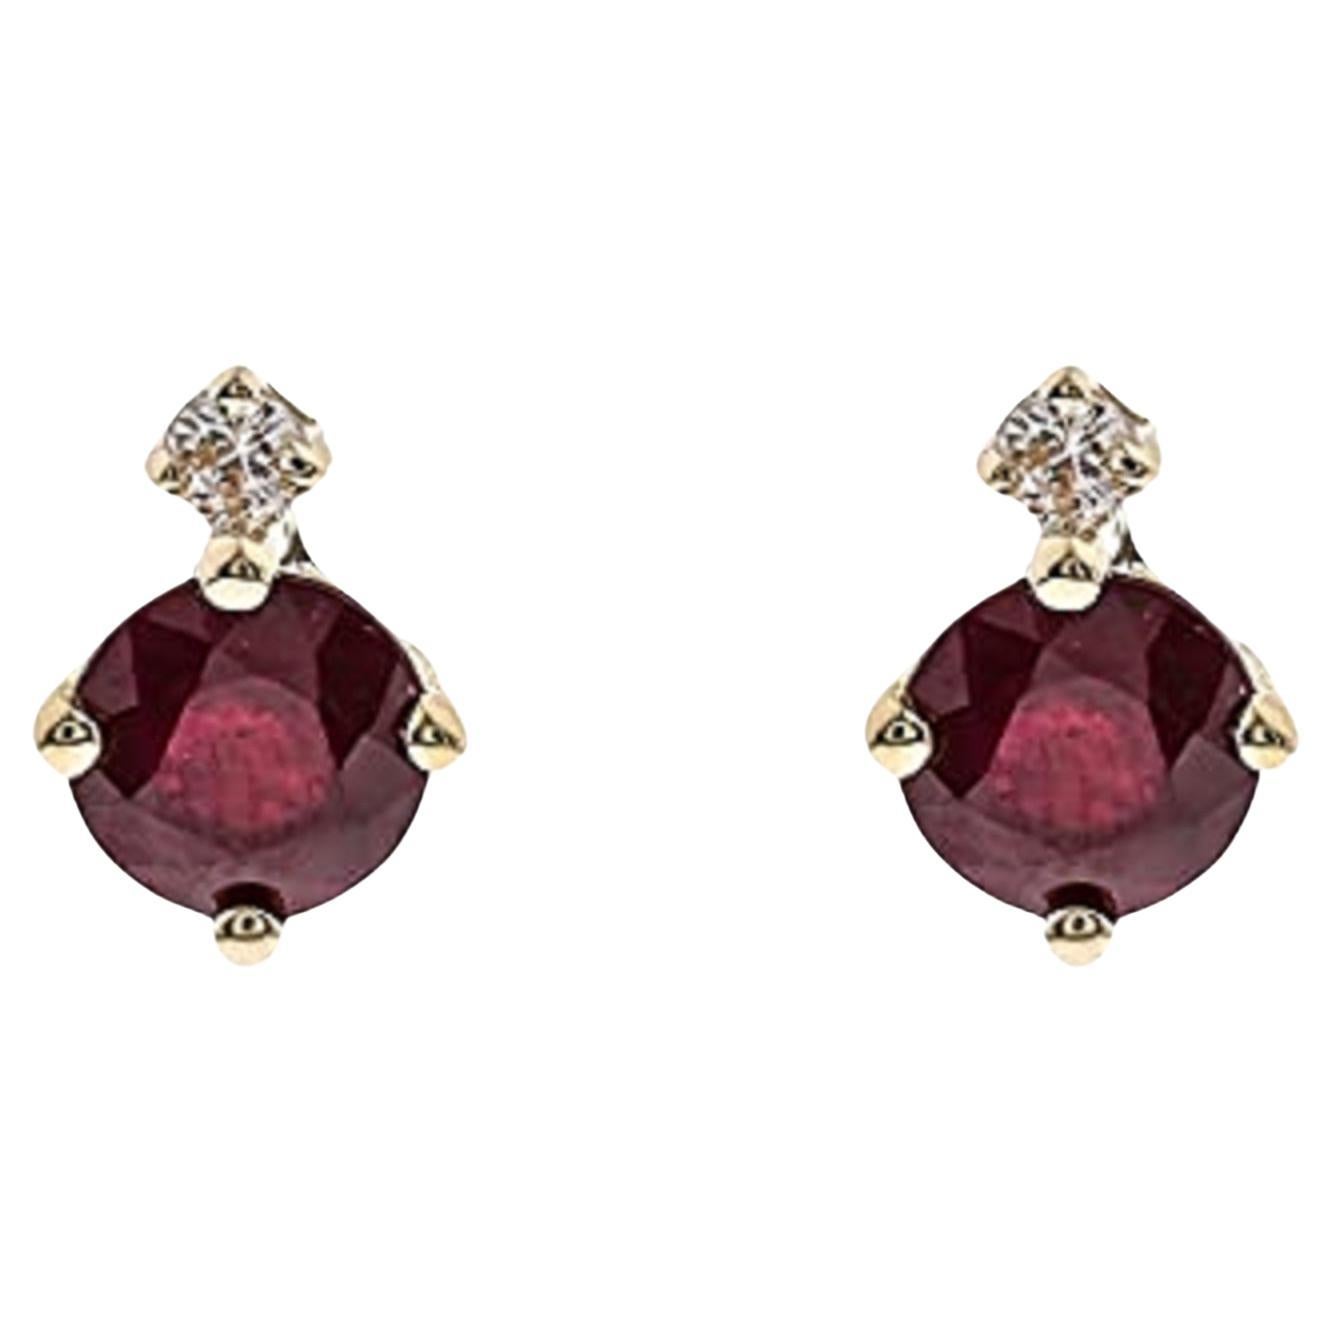 Gin & Grace 10K Yellow Gold Mozambique Ruby Earrings with Diamonds for women